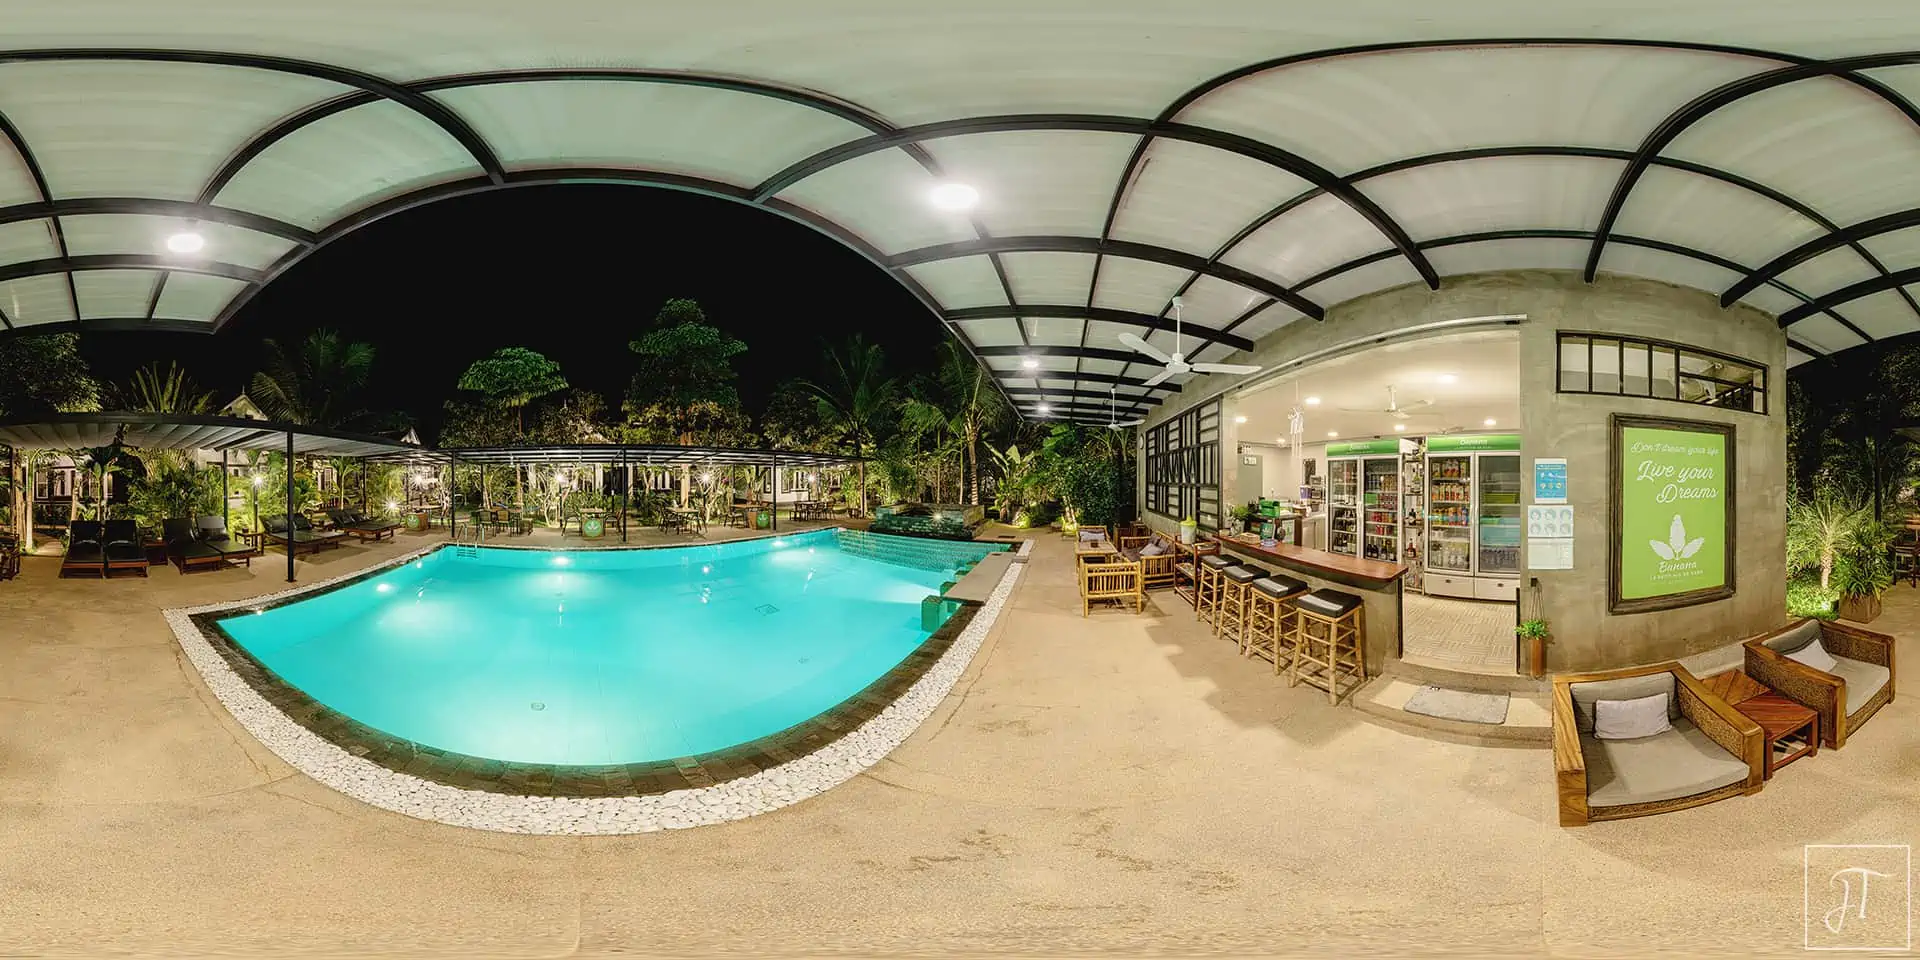 Night 360-degree photo at Banana Resort swimming pool area. Corporate photo by Julien Thomas